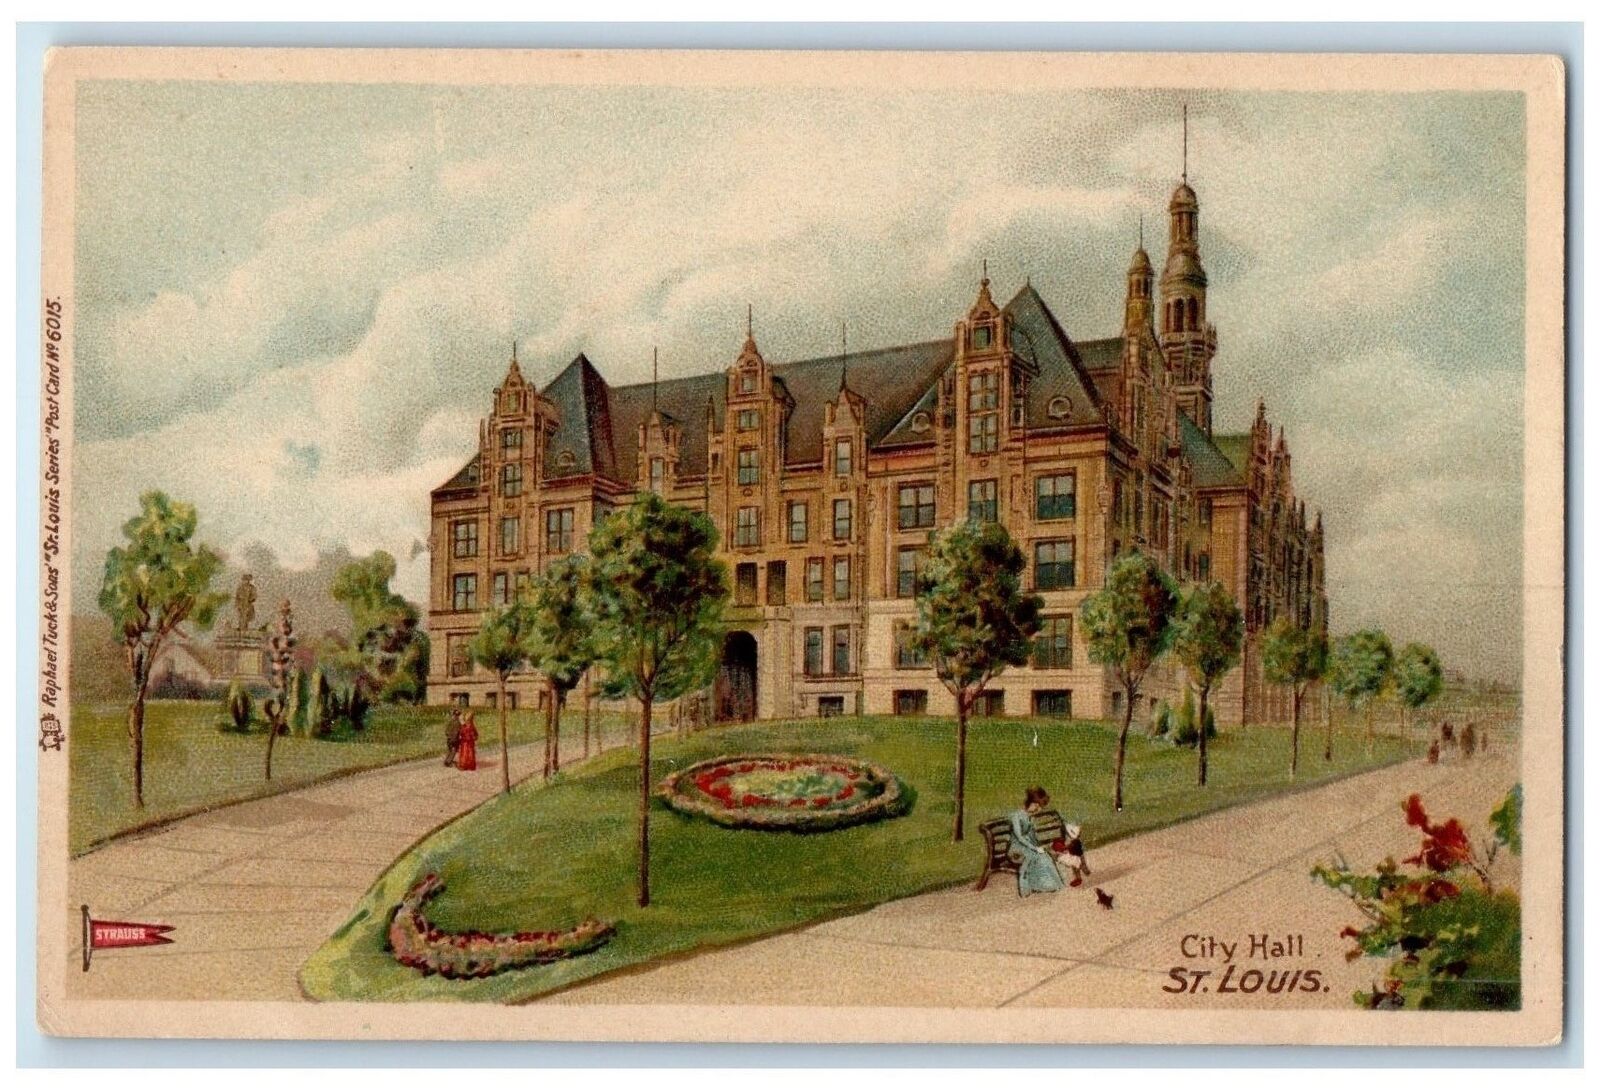 c1905s City Hall Exterior Roadside St. Louis Missouri MO Unposted Tuck Postcard